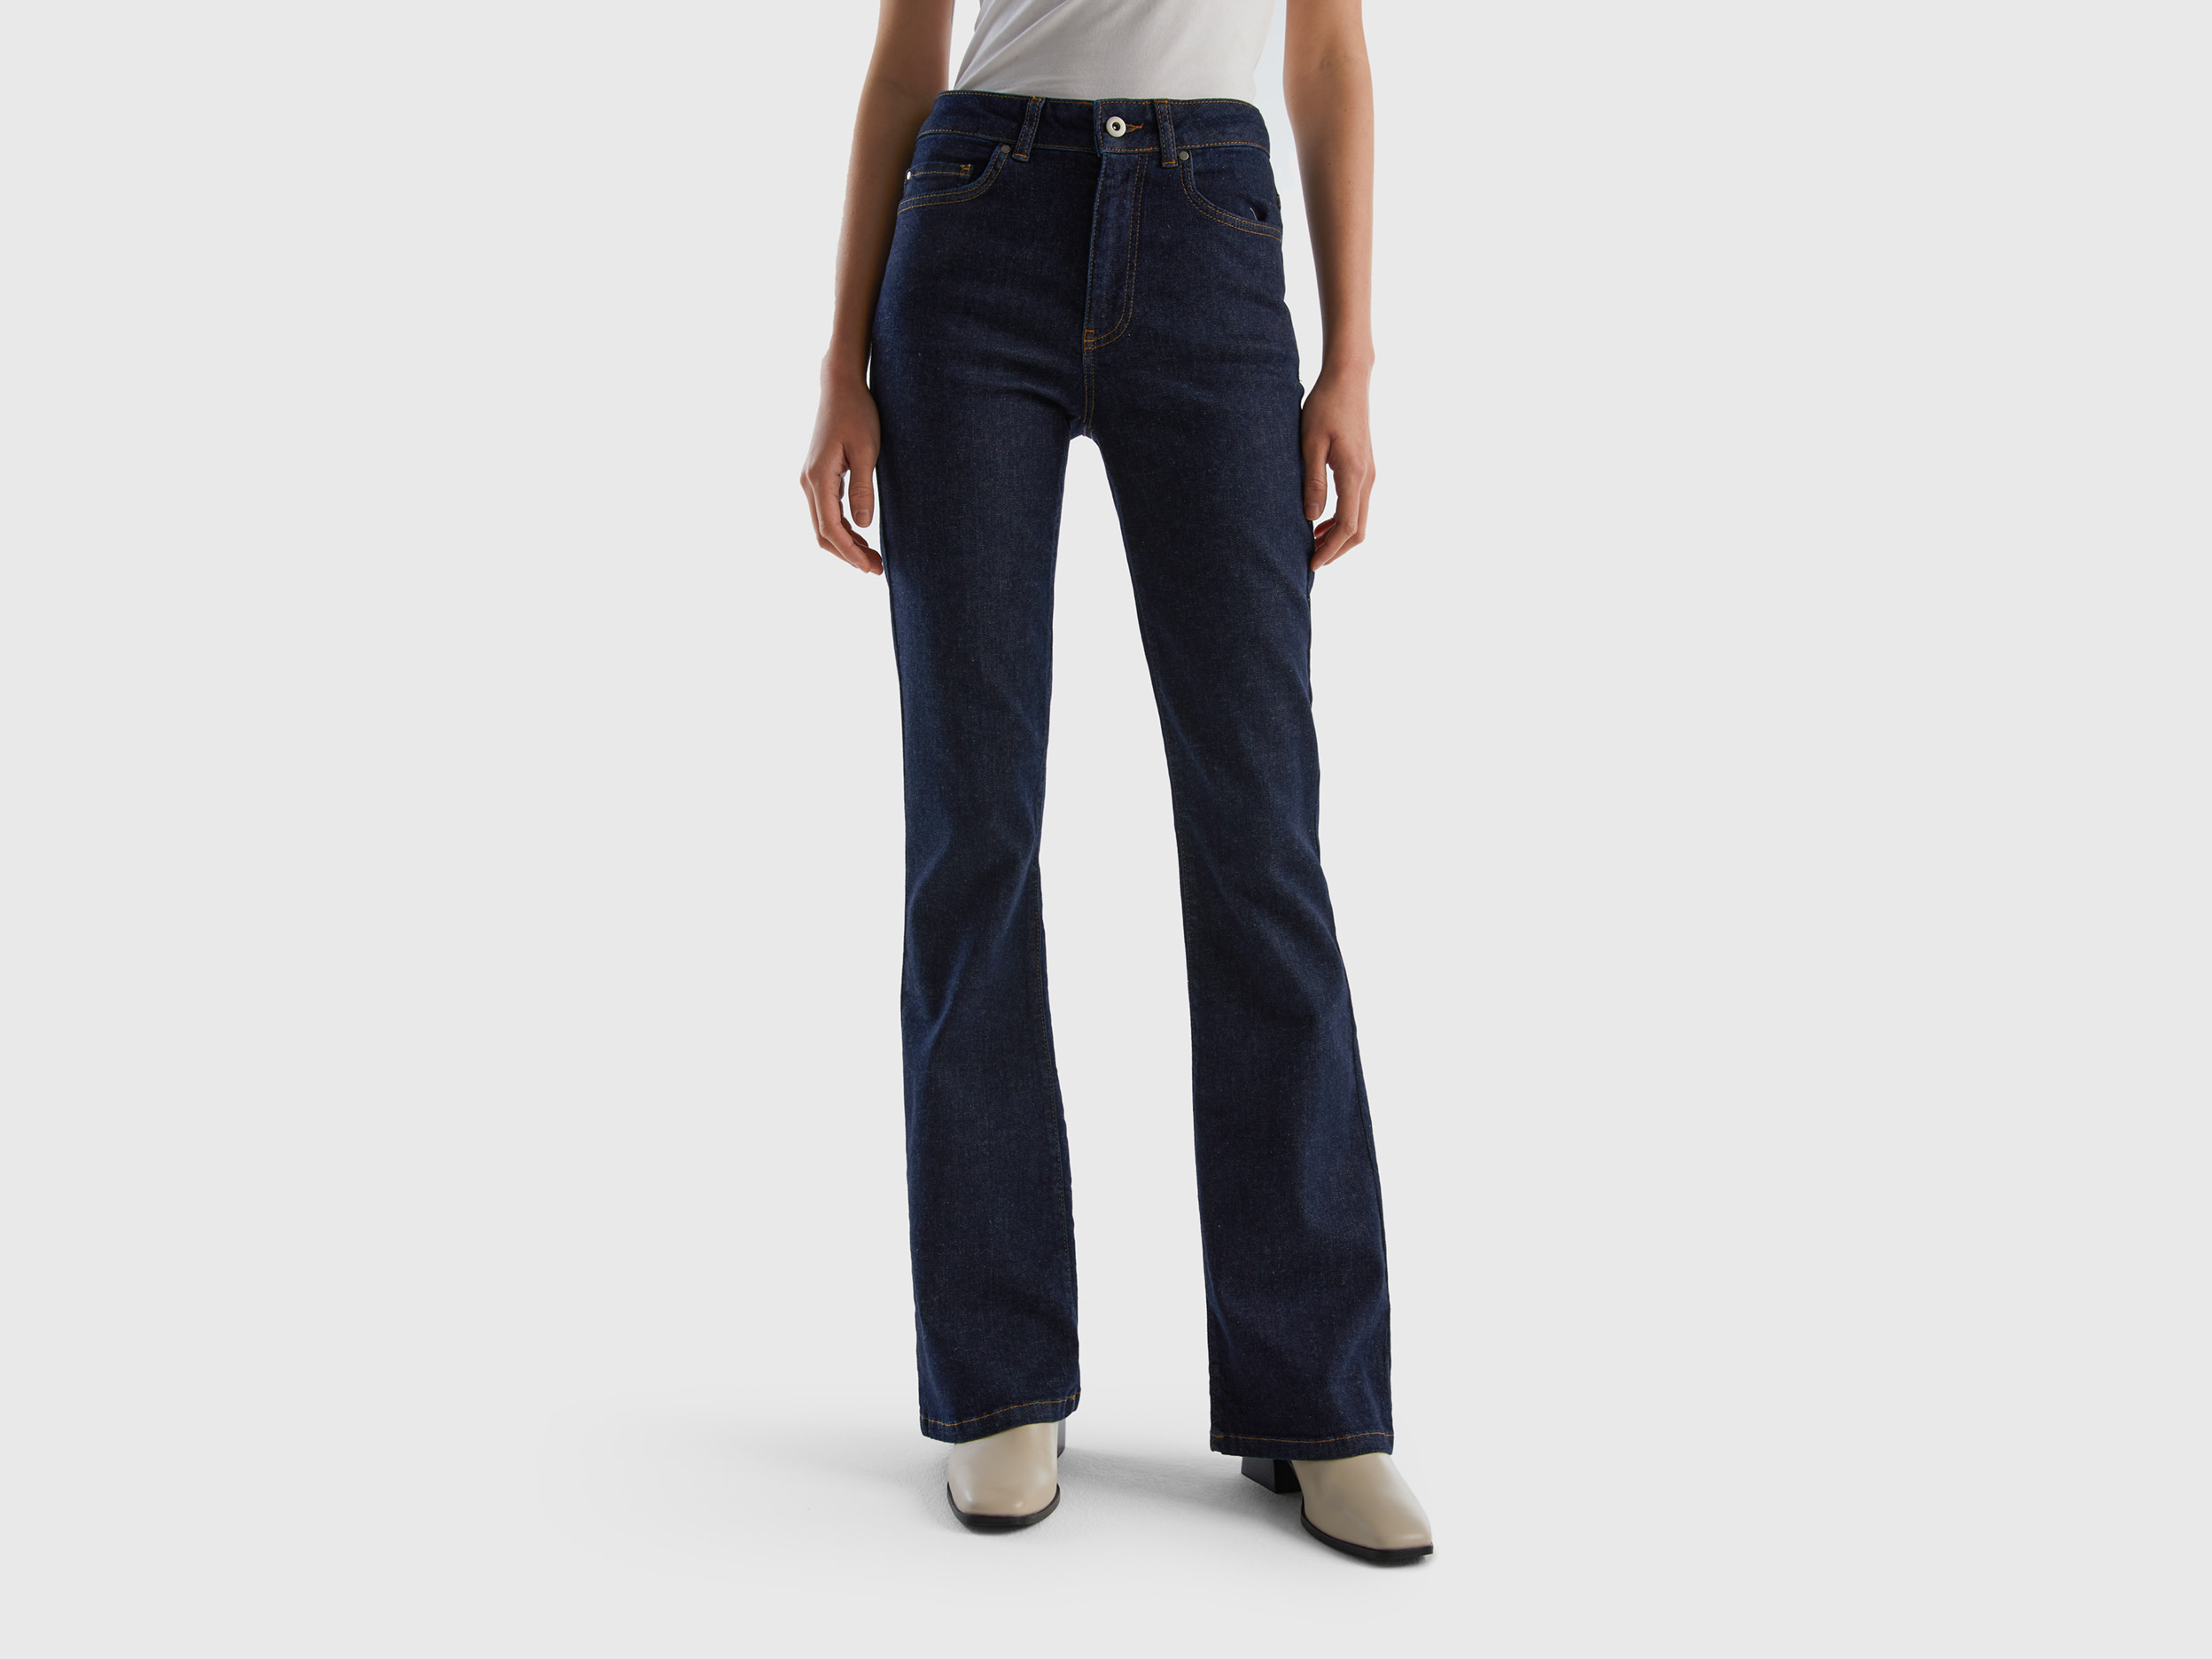 Benetton, Stretch Flared Jeans, size 28, Dark Blue, Women